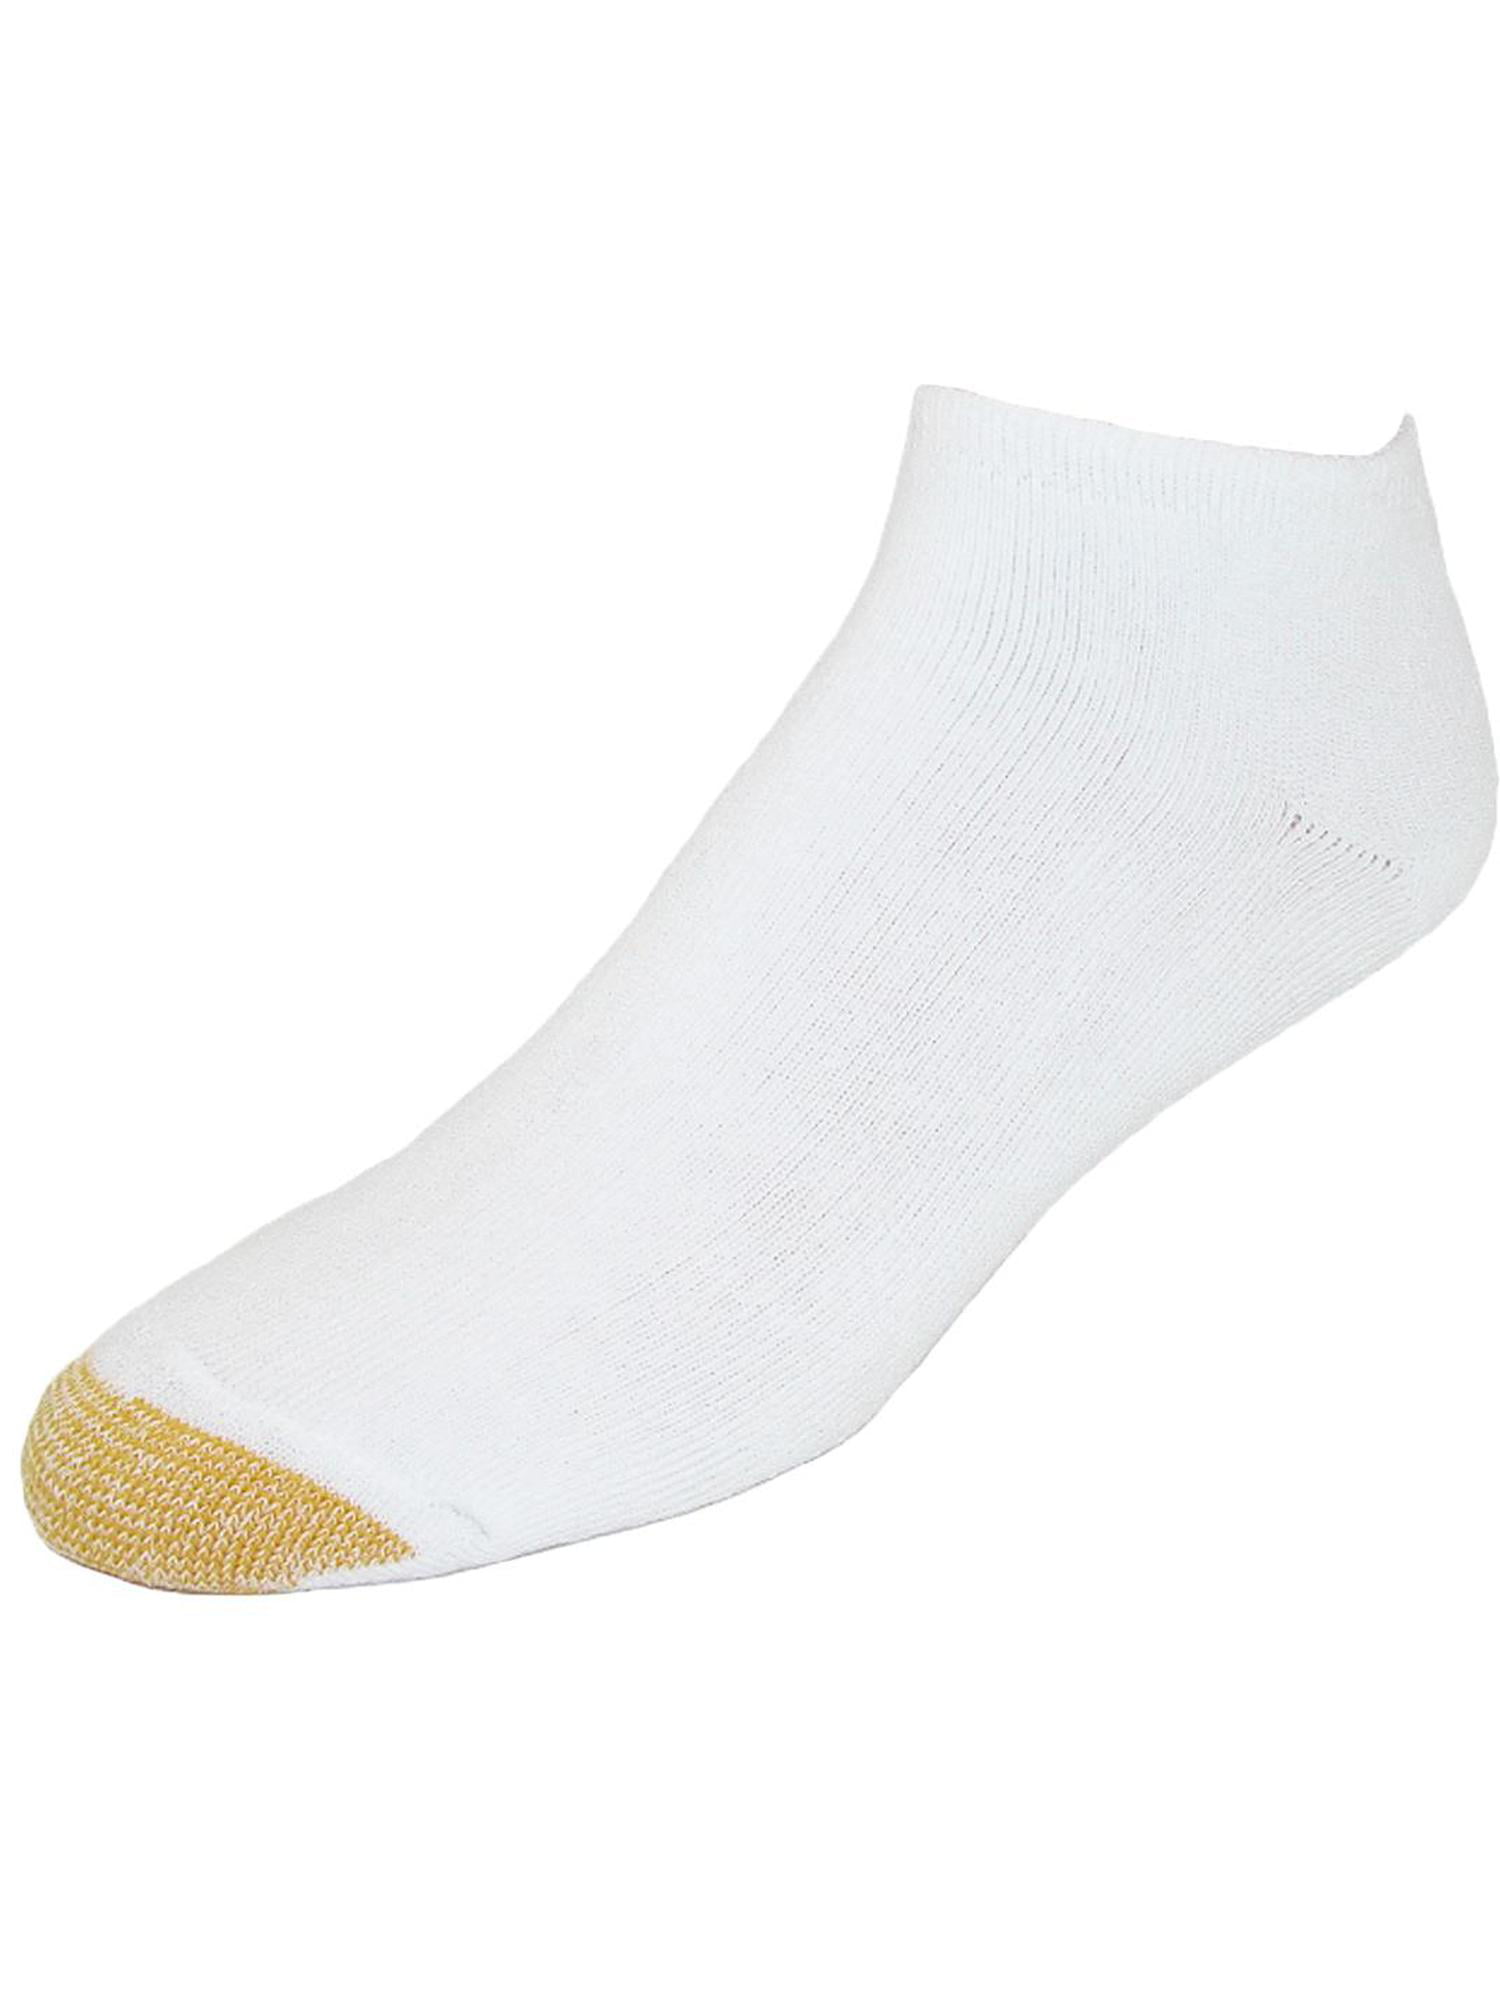 Gold Toe Cotton No Show Liner Socks 